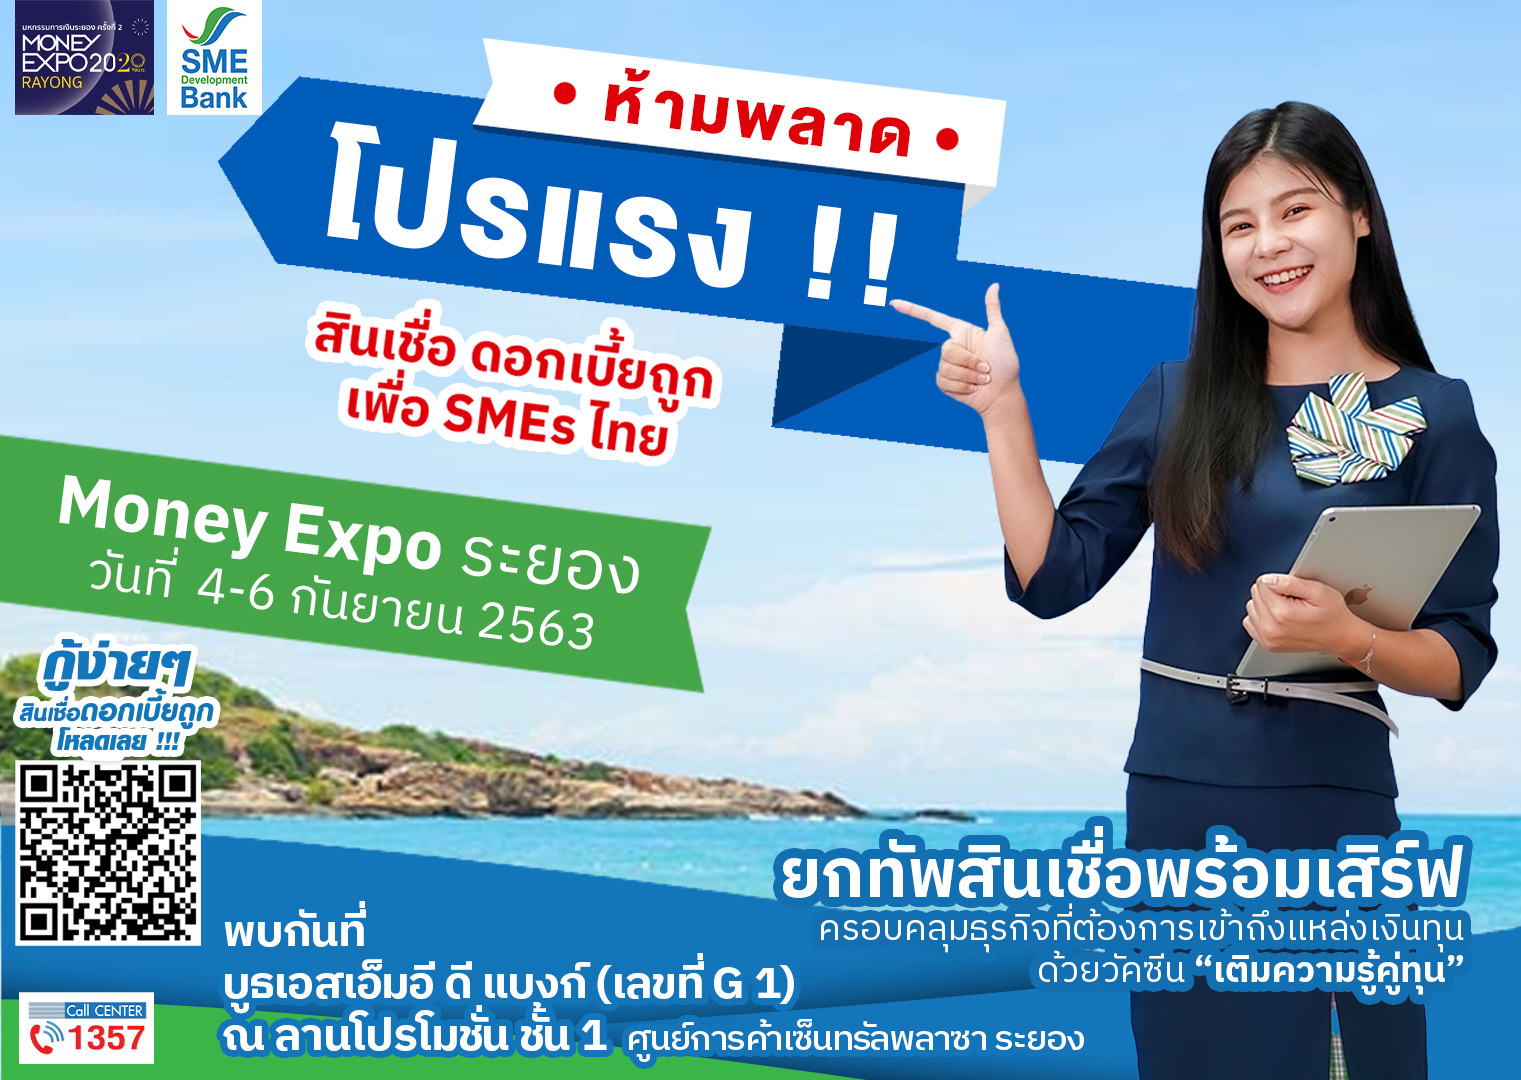 SME D Bankจัดโปรเด็ดงาน“Money Expo Rayong 2020” ดกอเบี้ยเริ่มต้น 2%ต่อปี